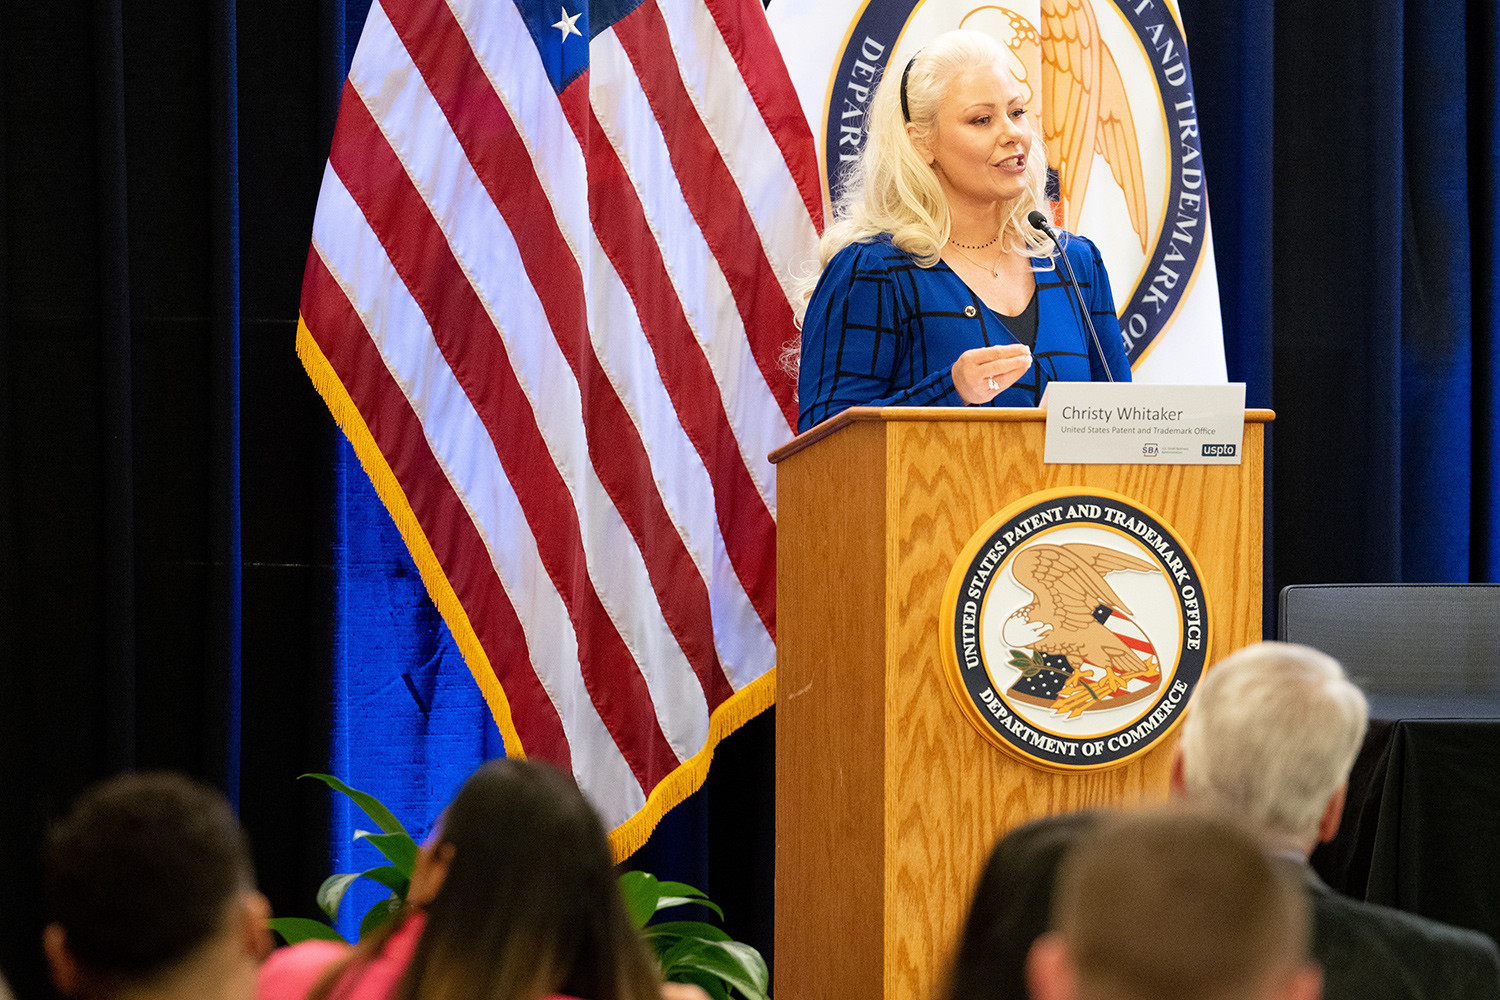 USPTO Public Affairs Specialist Christy Whitaker speaking at Military Entrepreneurship Summit on April 22